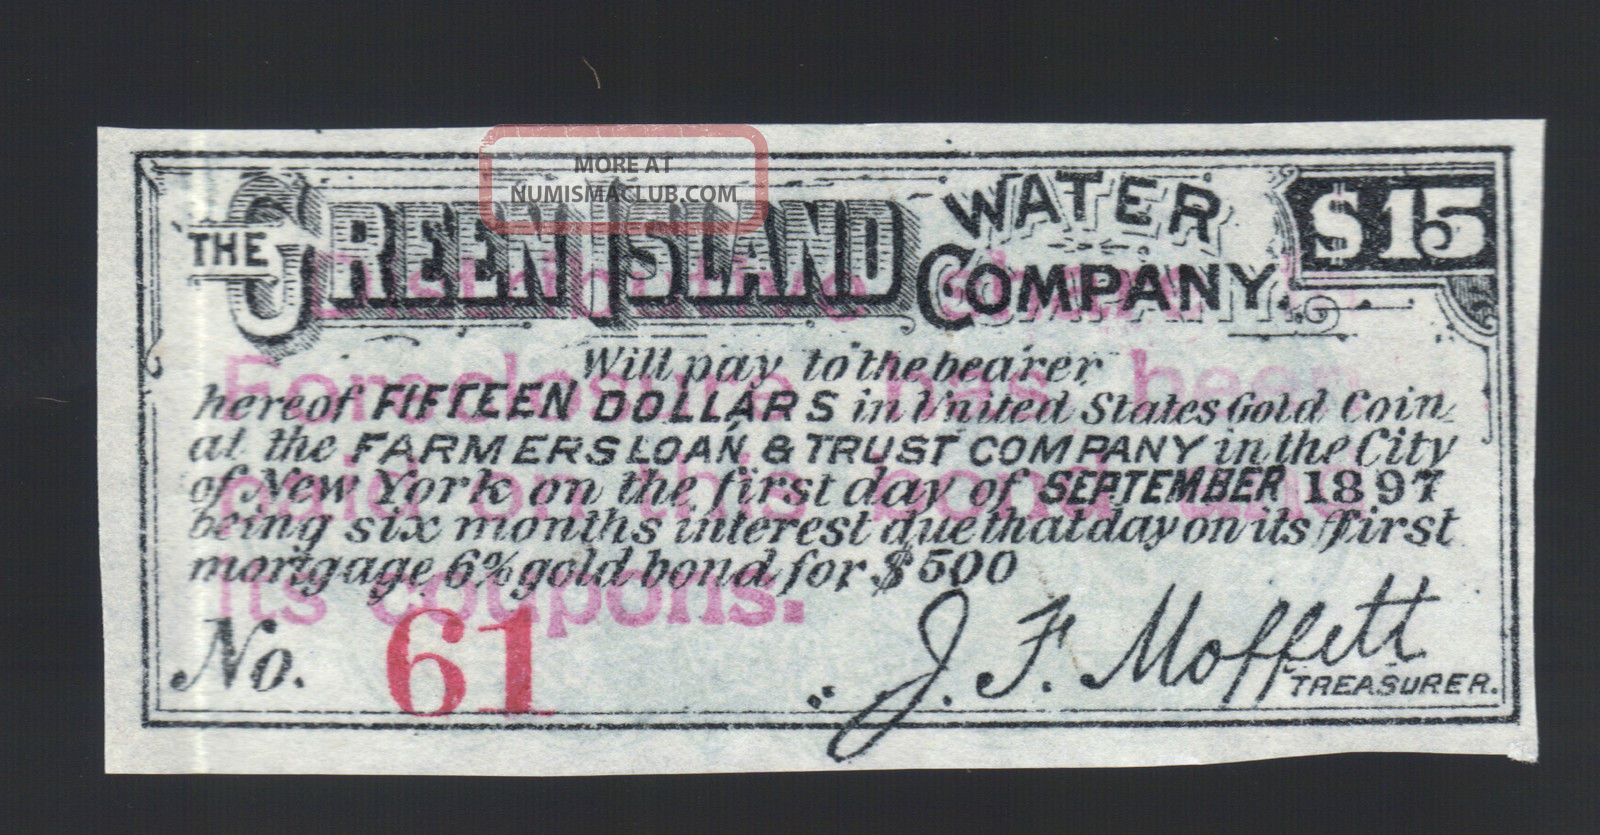 $15 1897 Green Island Water Co Certificate $500 Gold Bond Coupon Moffett Note Stocks & Bonds, Scripophily photo